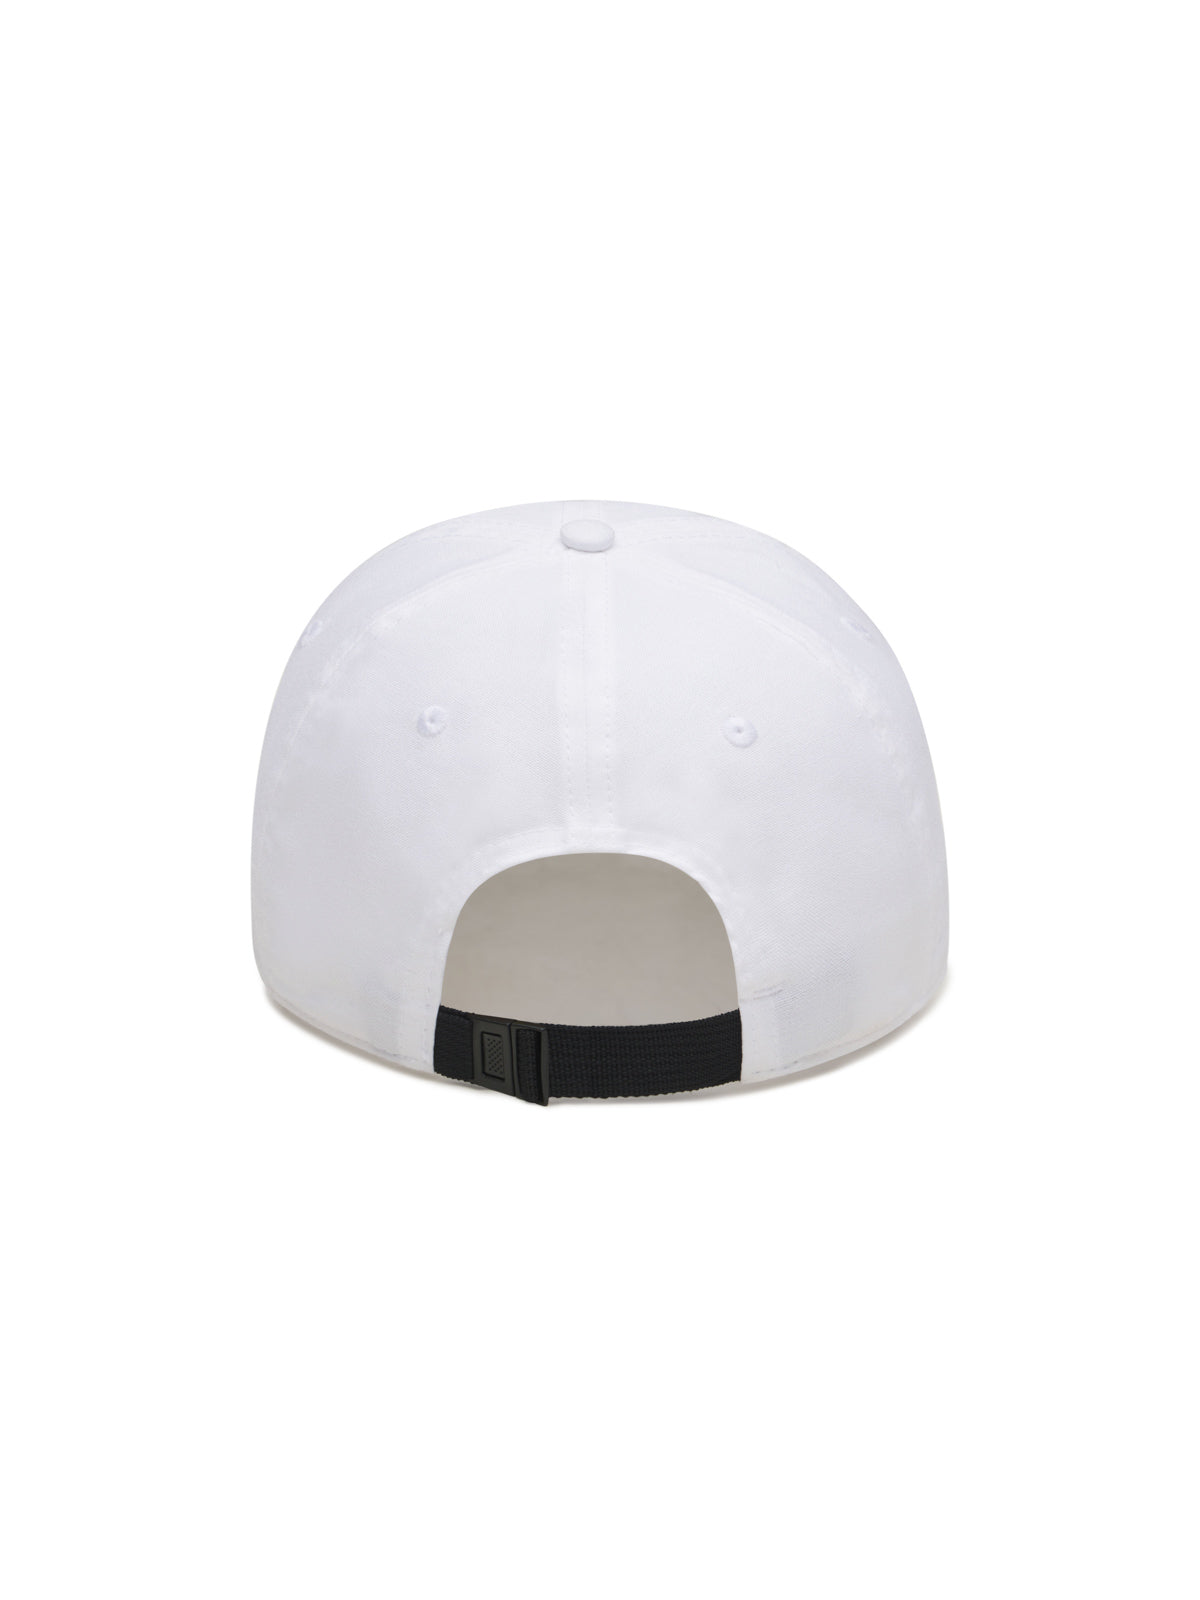 Drop Logo Hat - tasc Performance (white)